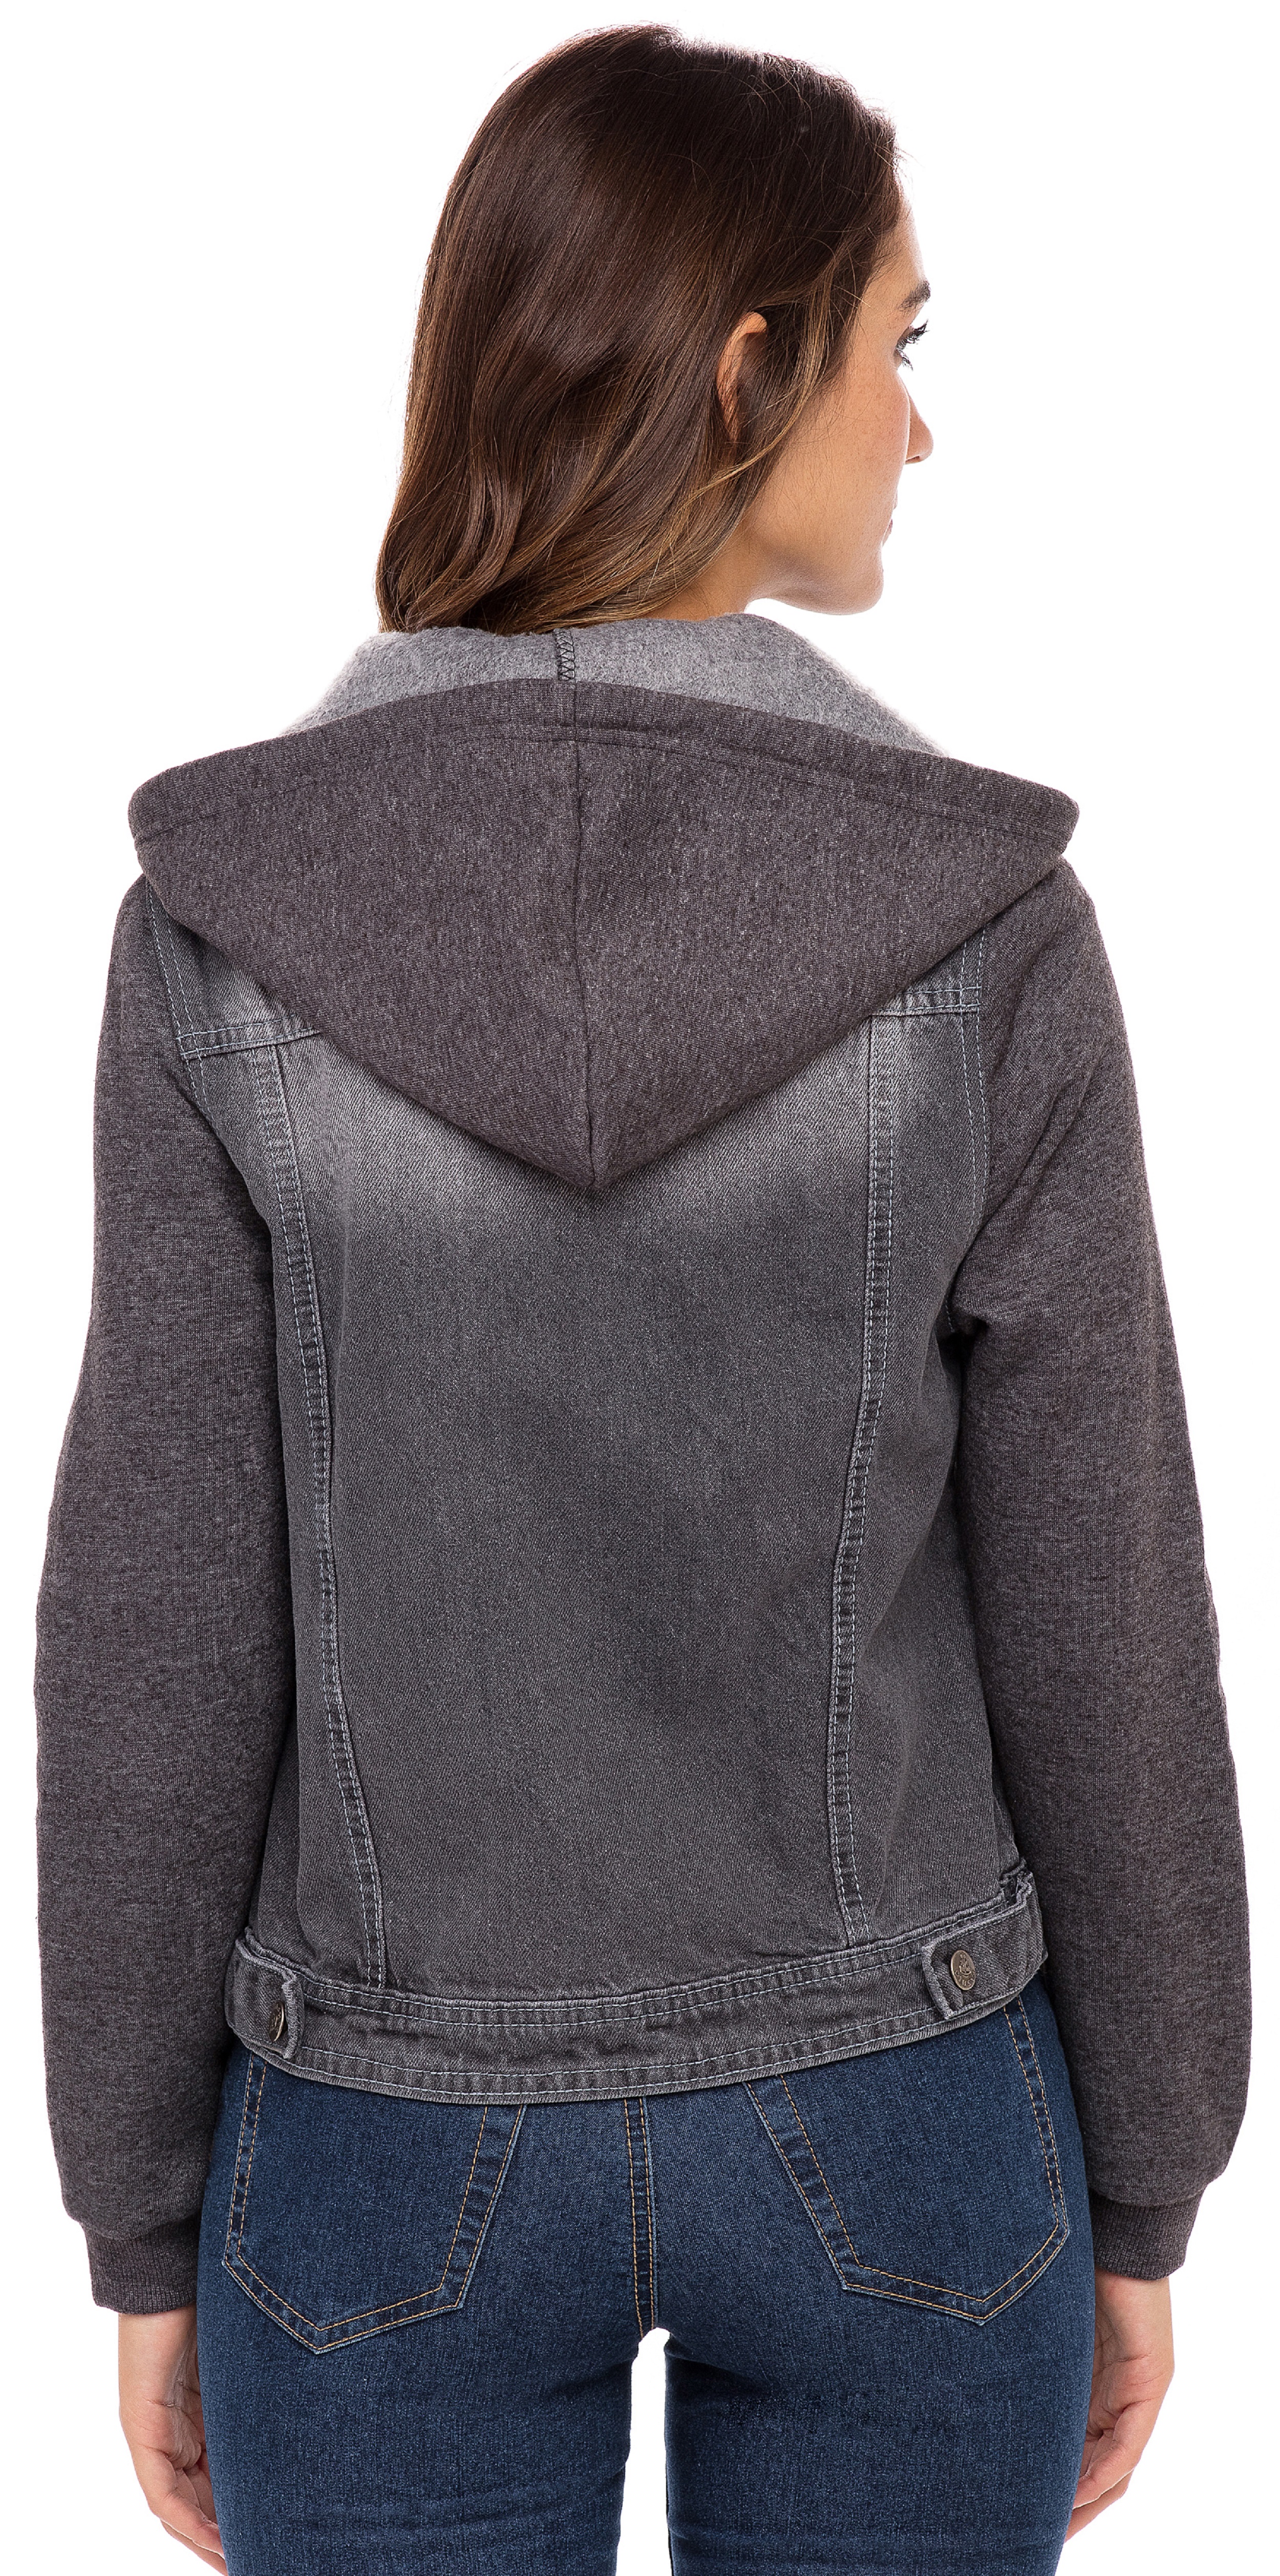 SKYLINEWEARS Women's Hooded Denim Jacket Long Sleeve Layered Drawstring Hoodie Washed Jean Jacket Grey Small - image 5 of 6